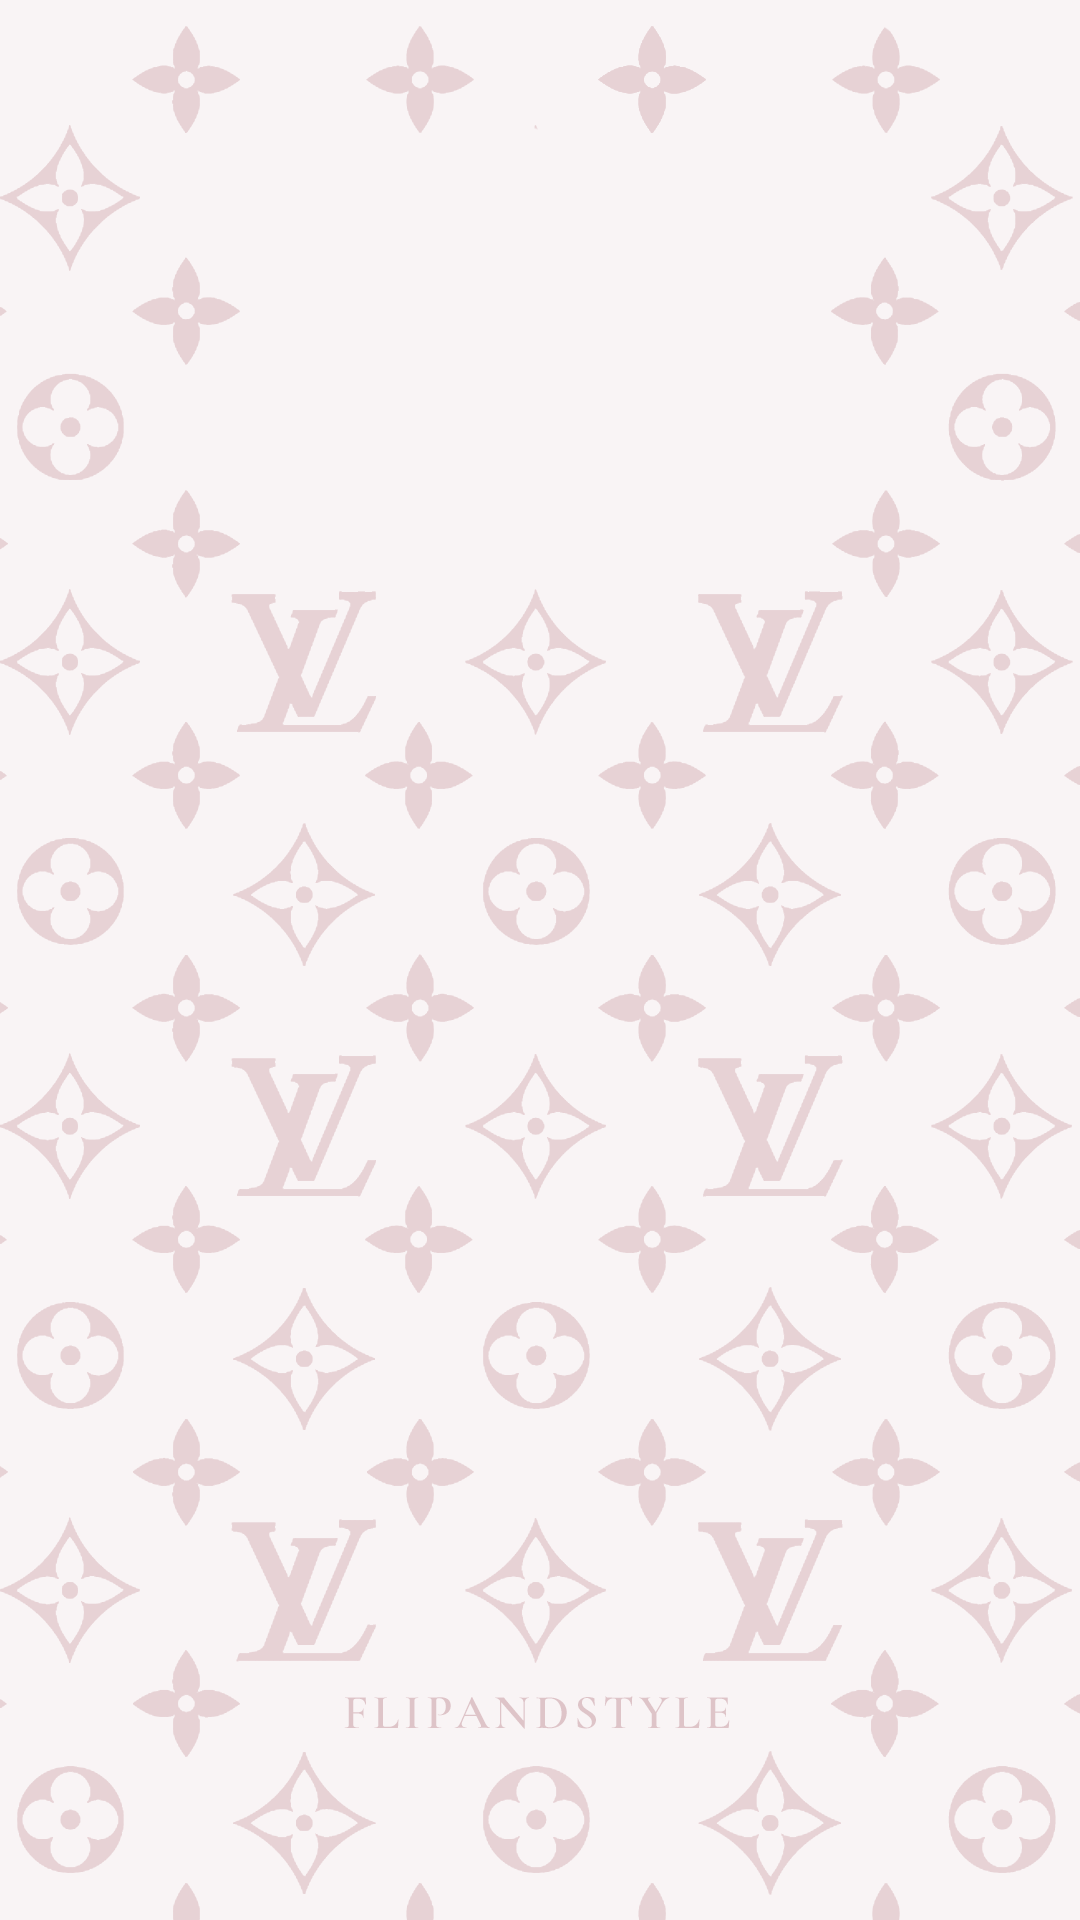 Louis Vuitton Aesthetic Background - 2021  Sparkly iphone wallpaper, Luis  vuitton aesthetic wallpaper, Iphone wallpaper logo